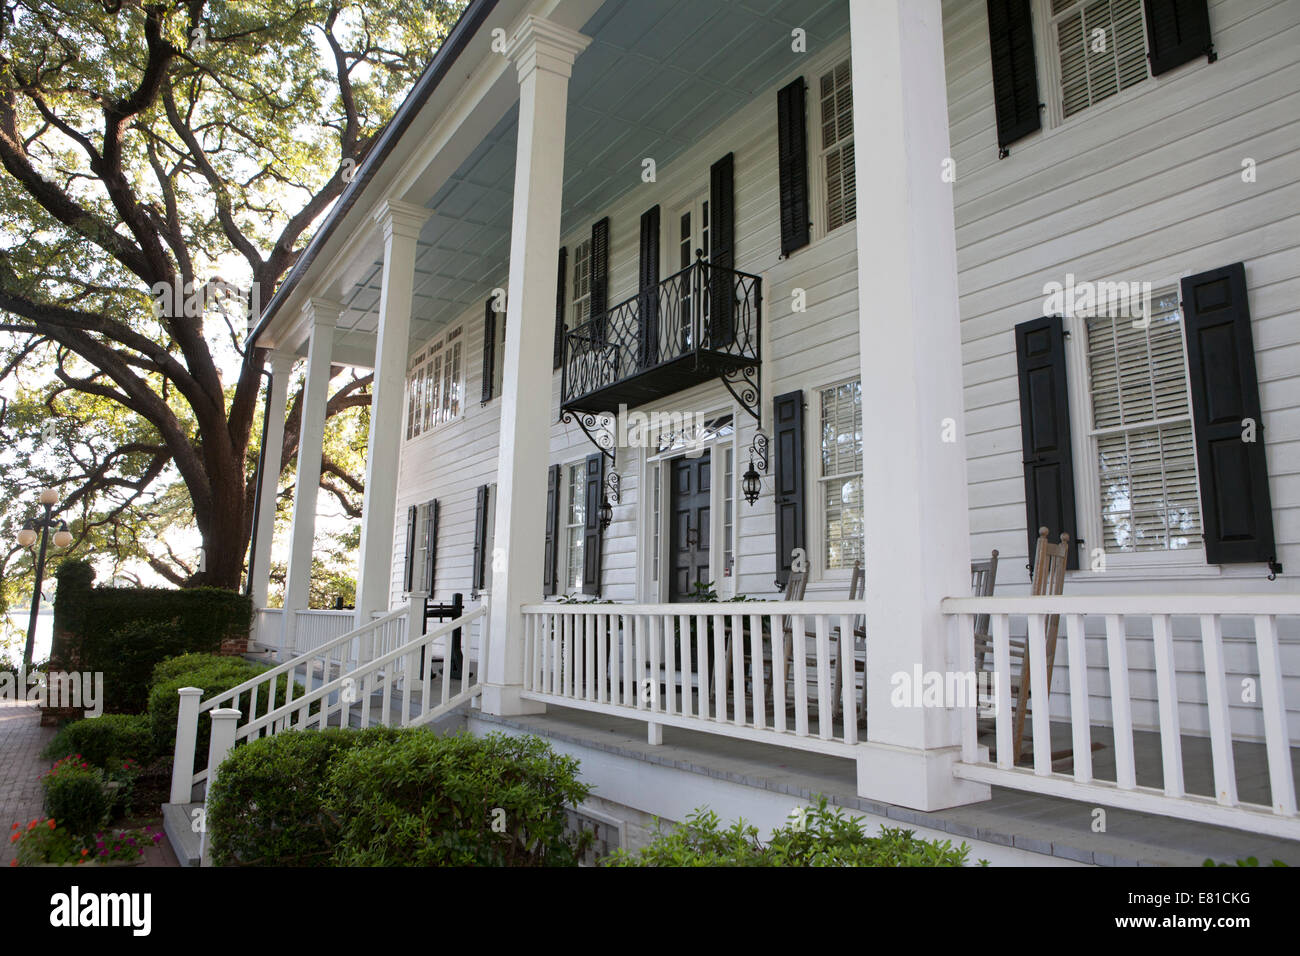 Kaminski house di Georgetown, South Carolina, risalente a prima della guerra rivoluzionaria americana. Foto Stock